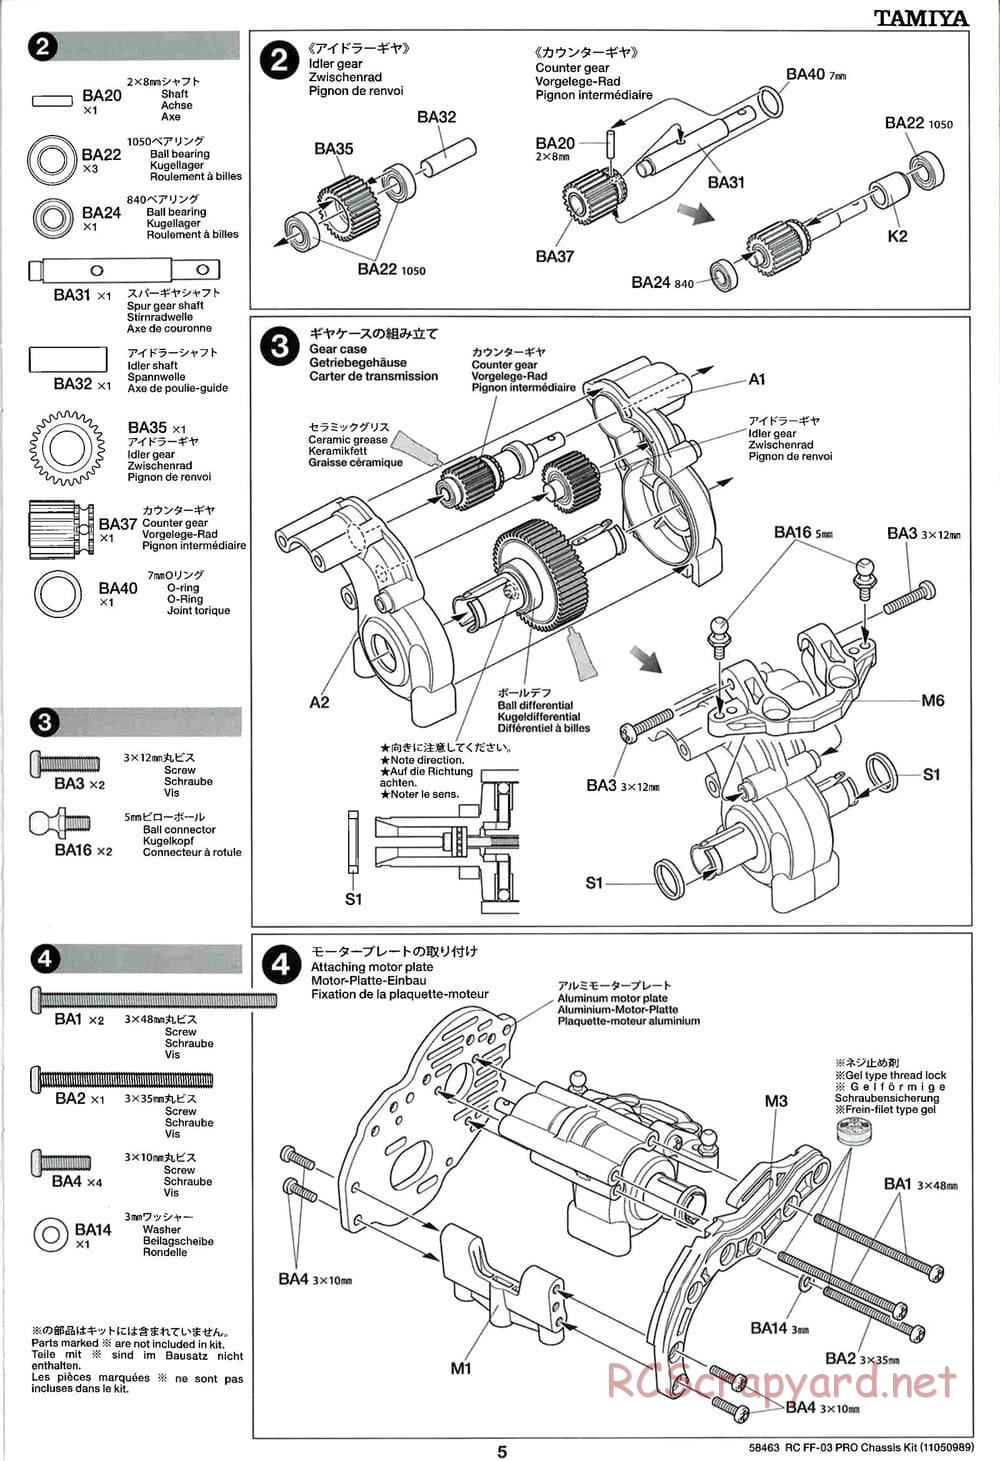 Tamiya - FF-03 Pro Chassis - Manual - Page 5